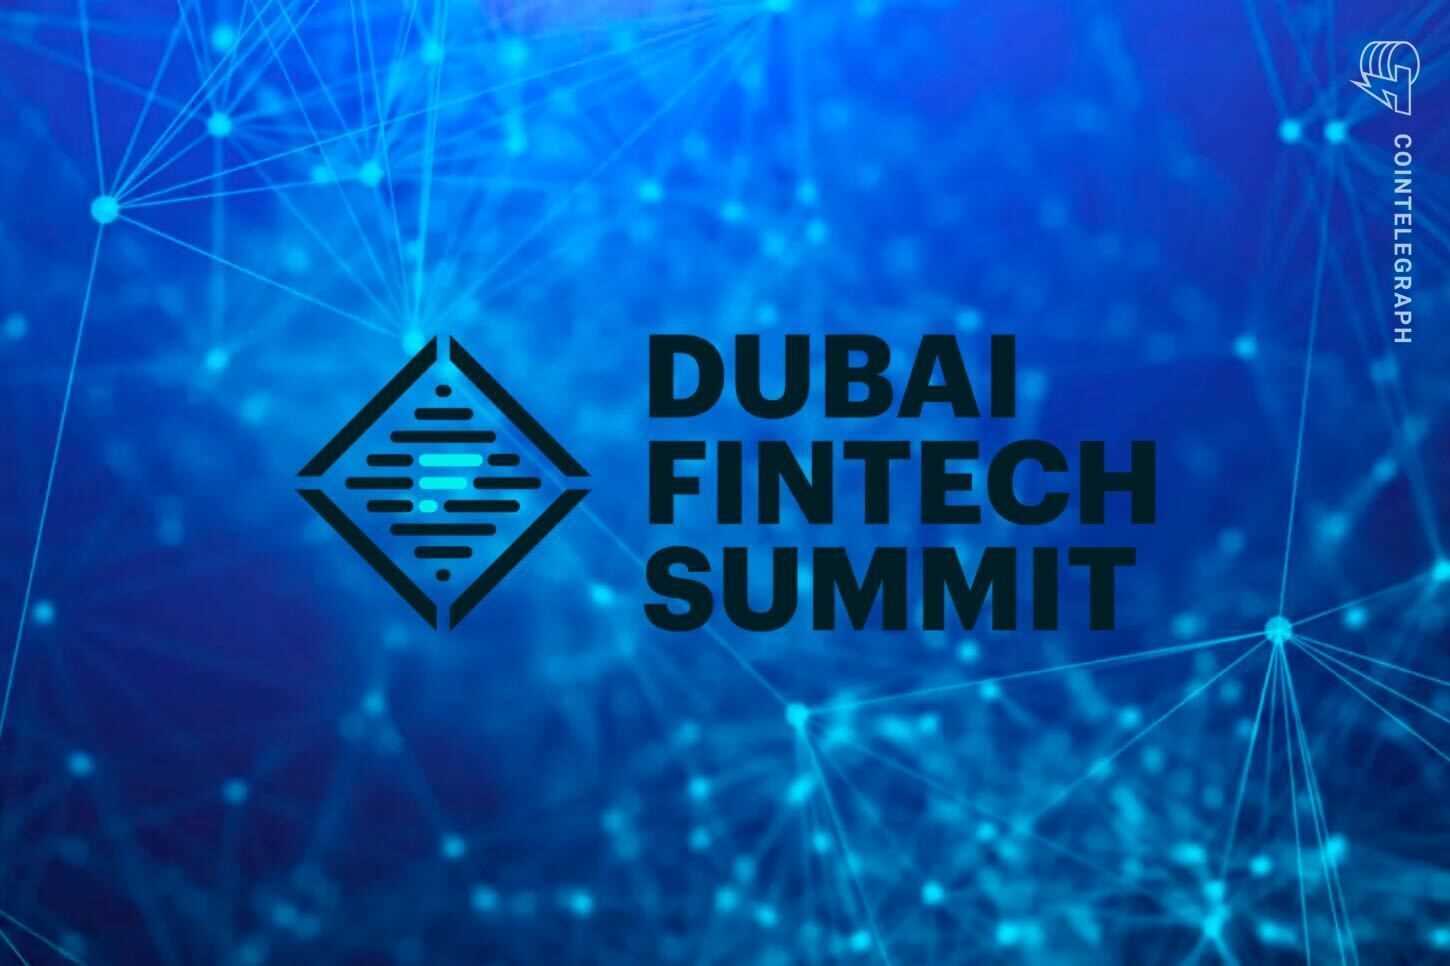 Investment surges in DIFC’s fintech firms ahead of Dubai FinTech Summit